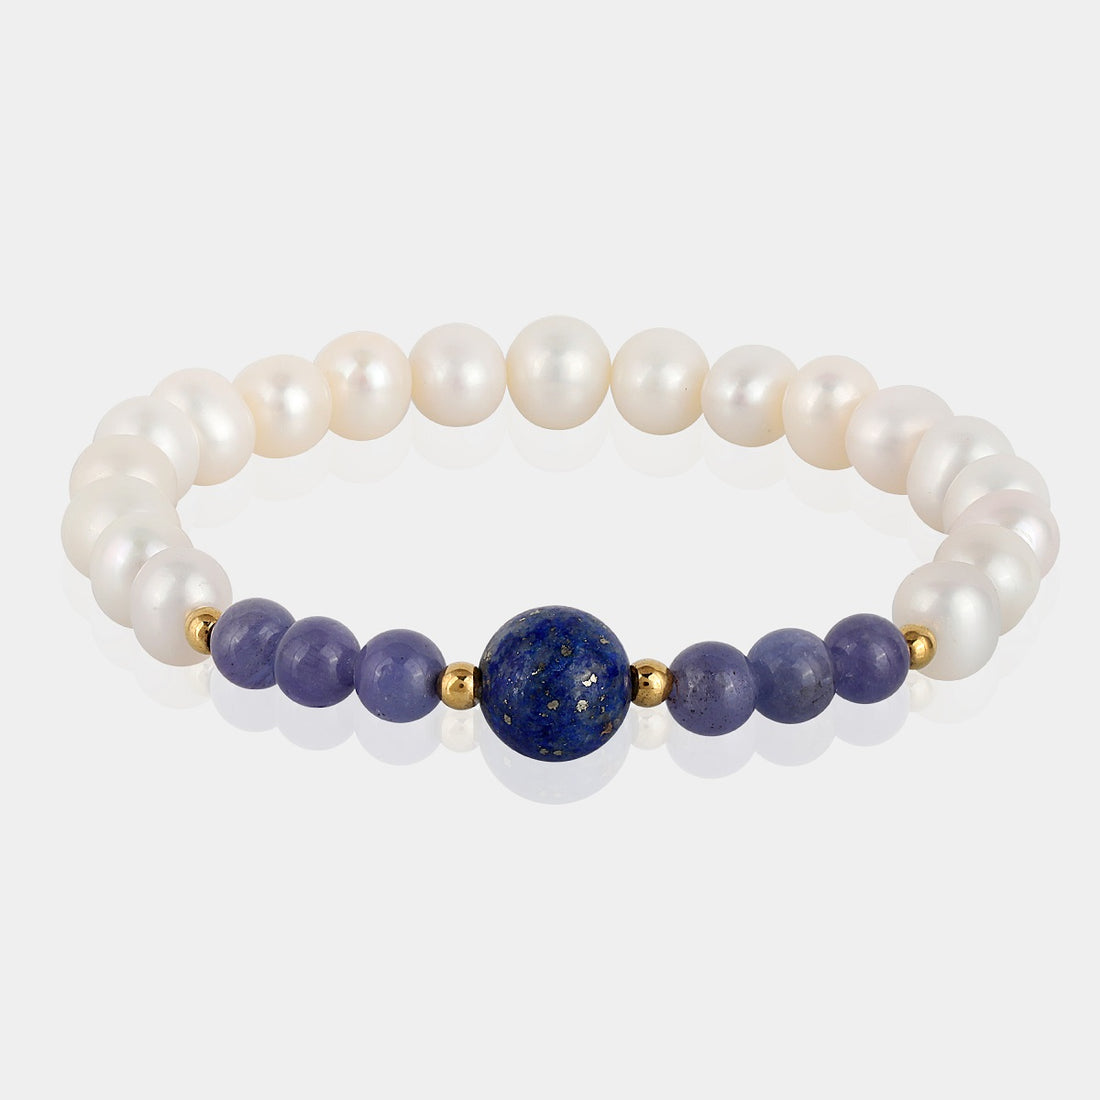 Handmade Gemstone Stretch Bracelet with Pearl, Tanzanite, Lapis Lazuli, Hematite, White, Blue, Gold, Comfort Fit